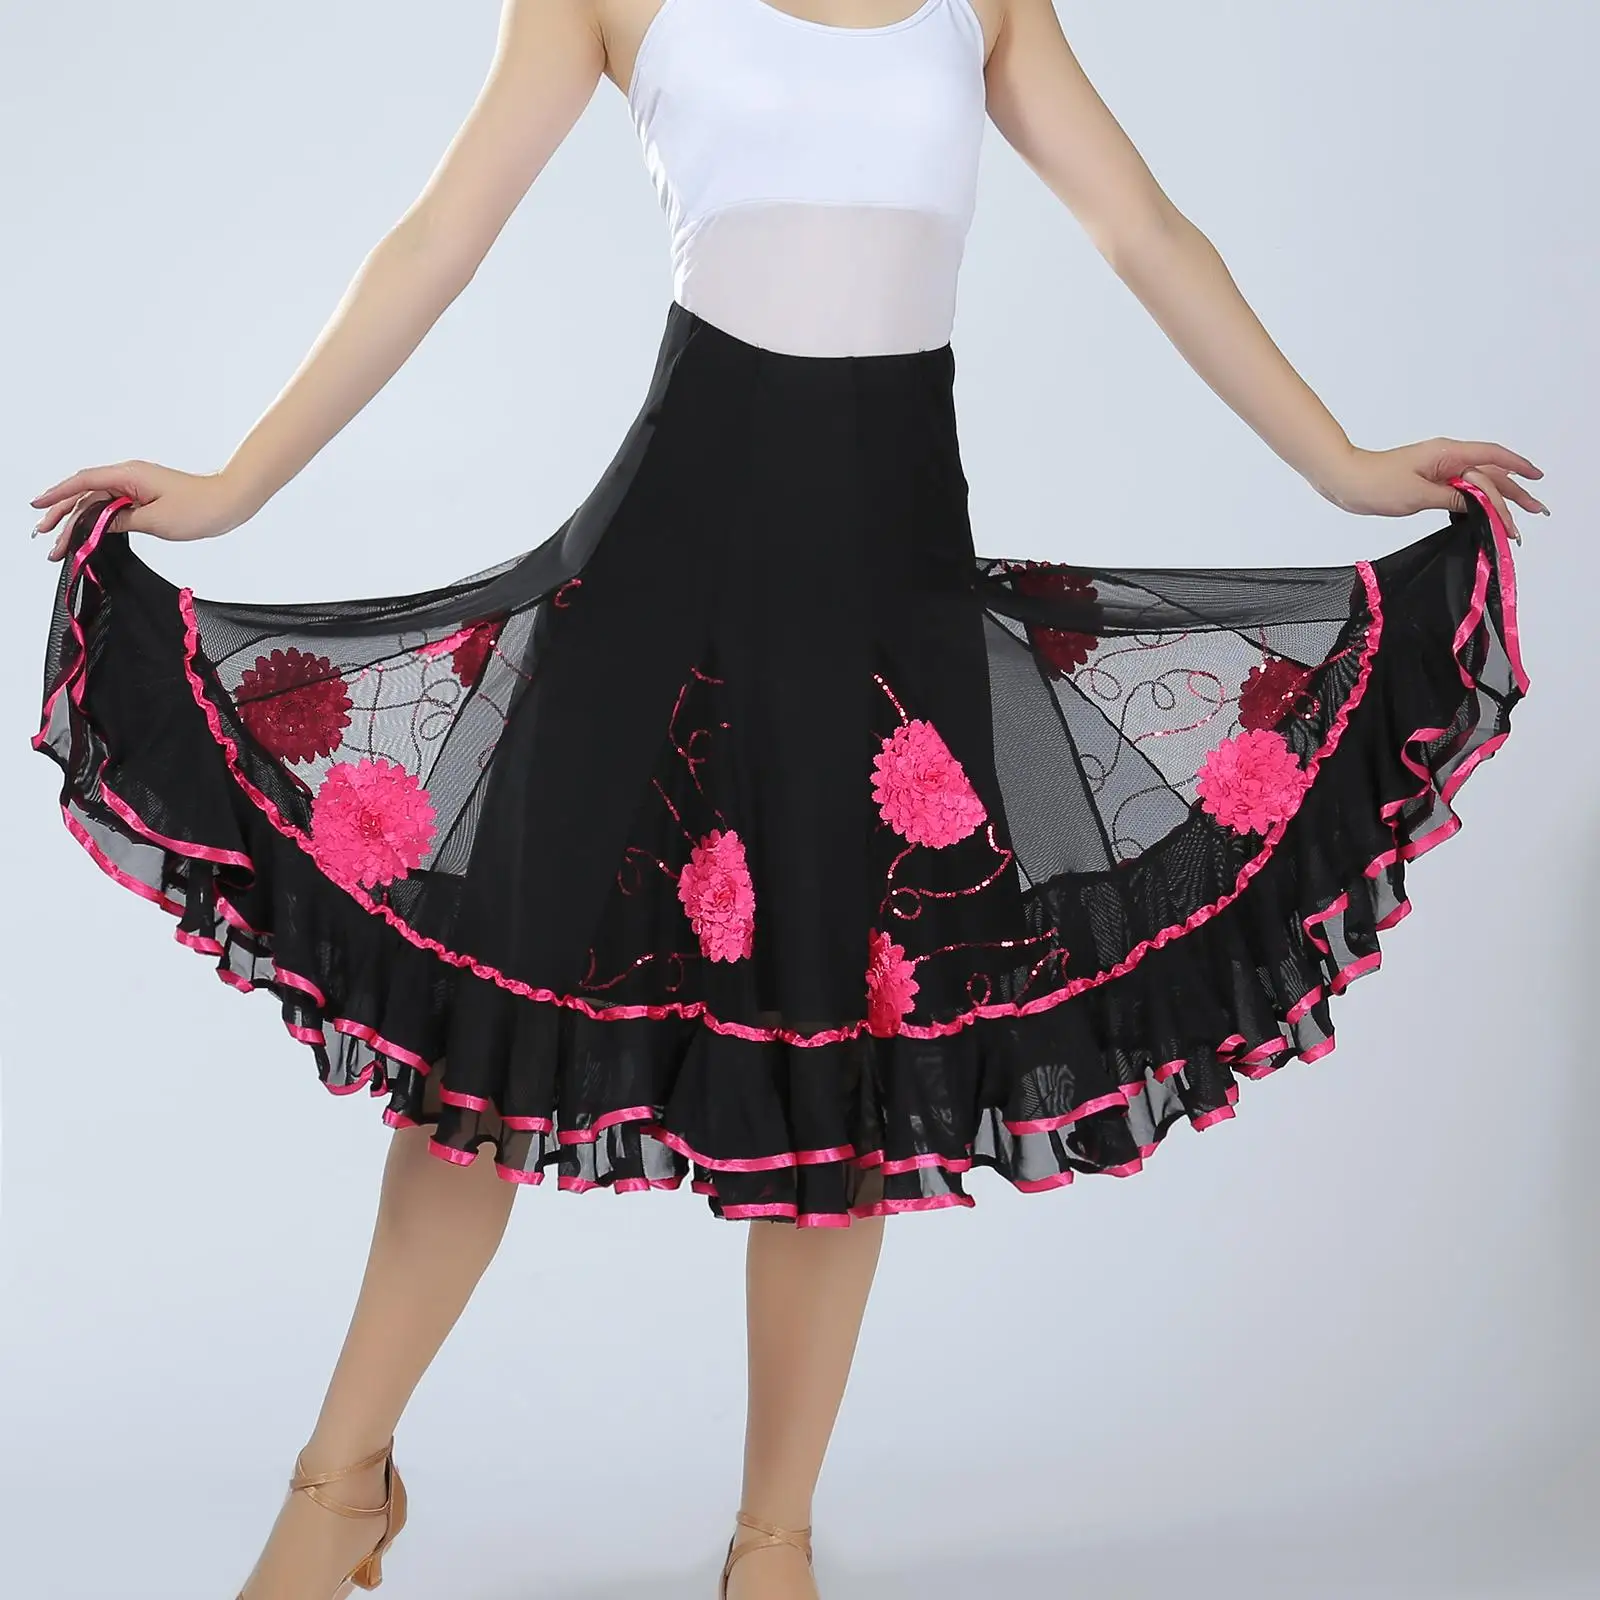 Elegant Ballroom Dance Skirt Dancing Costume Party Stage Performance Long Swing Skirt for Flamenco Cha Cha Rumba Women